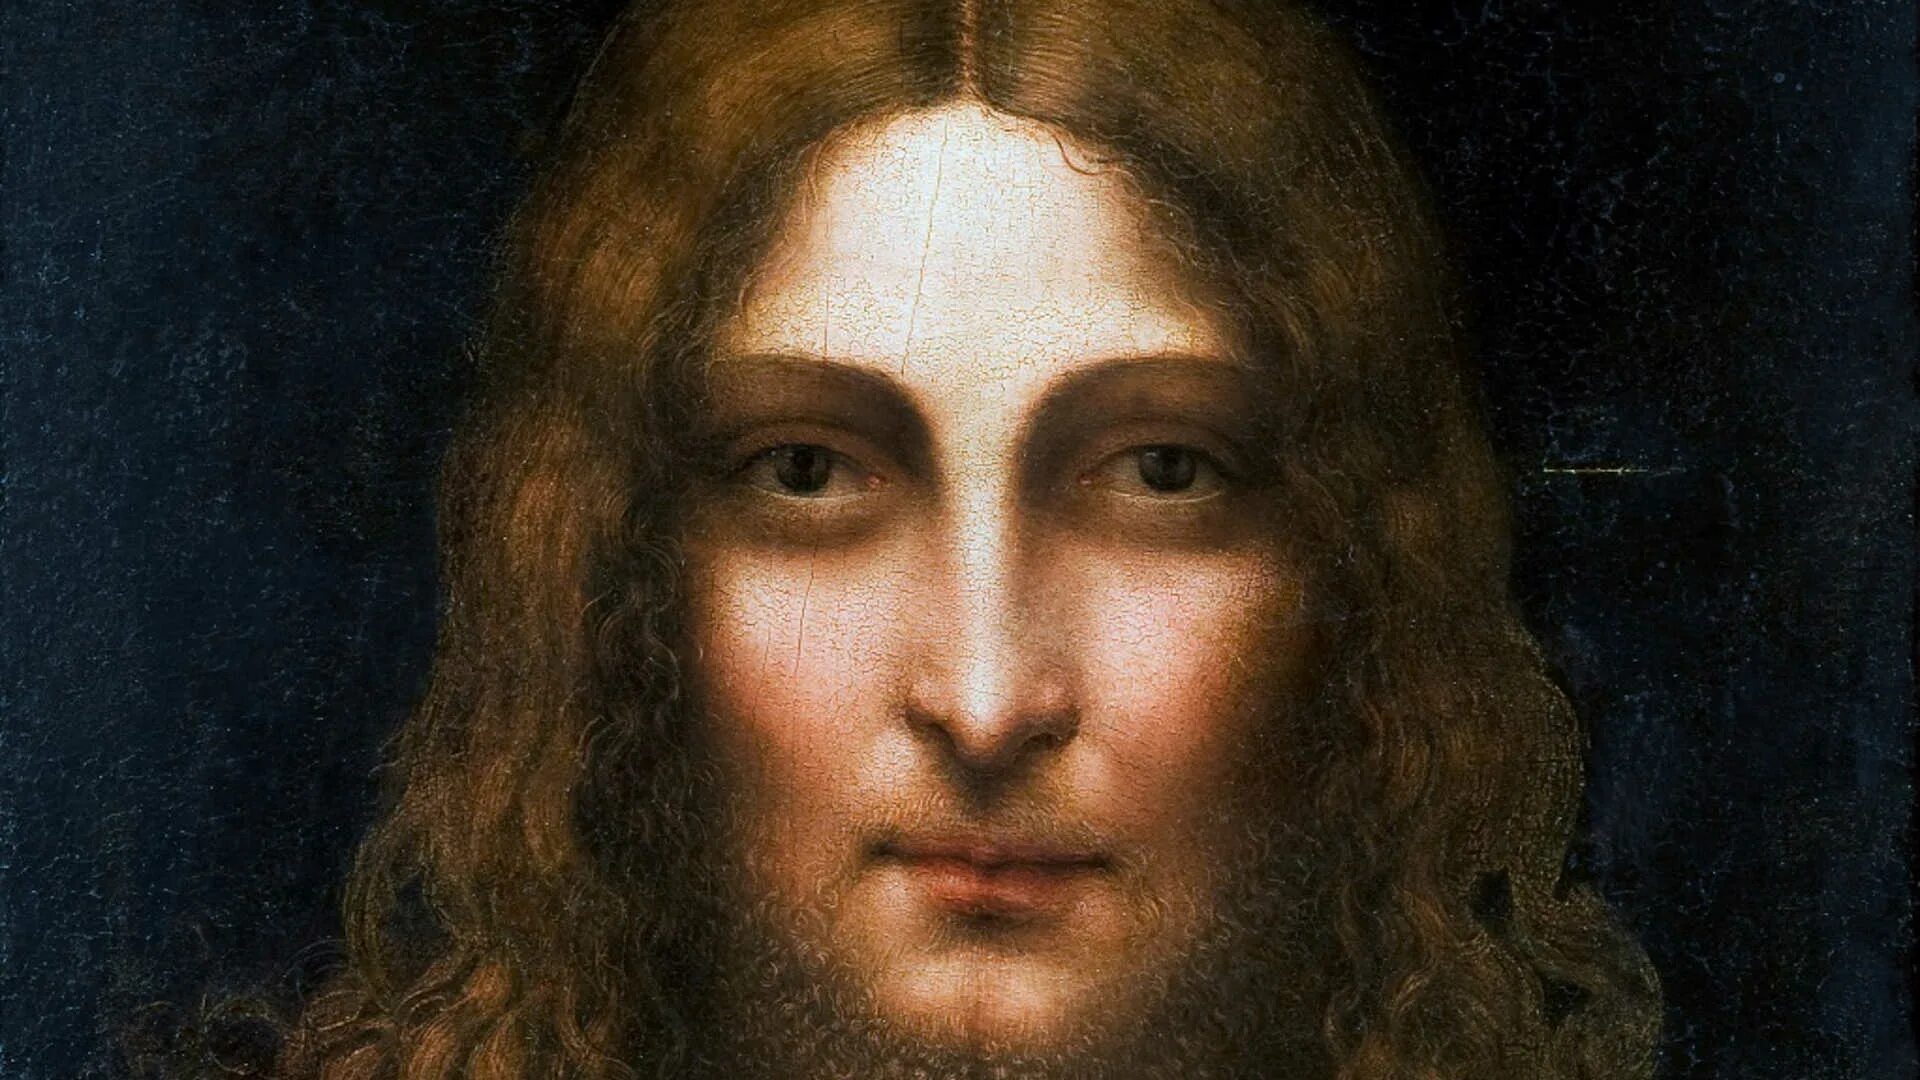 Леонардо да винчи христос. Христос да Винчи. Леонардо да Винчи Иисус Христос. Леонардо да Винчи Христос Спаситель мира картина. Портрет Христа Леонардо да Винчи.